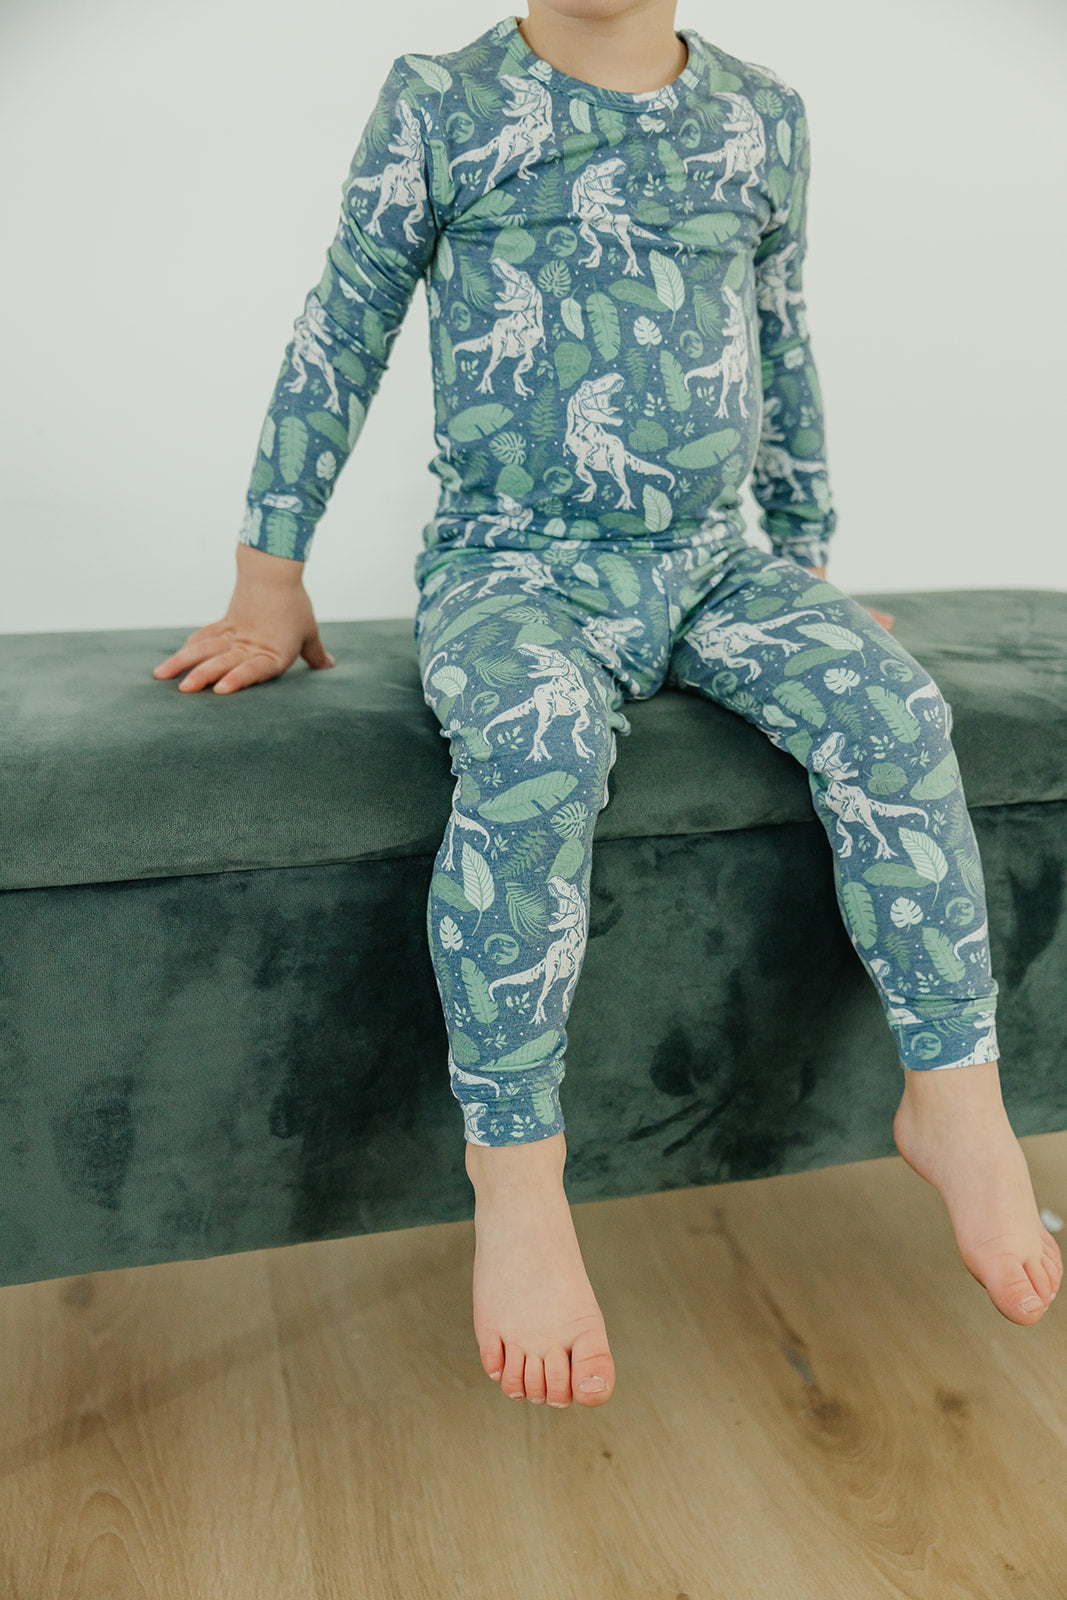 2pc Long Sleeve Pajama Set - Jurassic Park